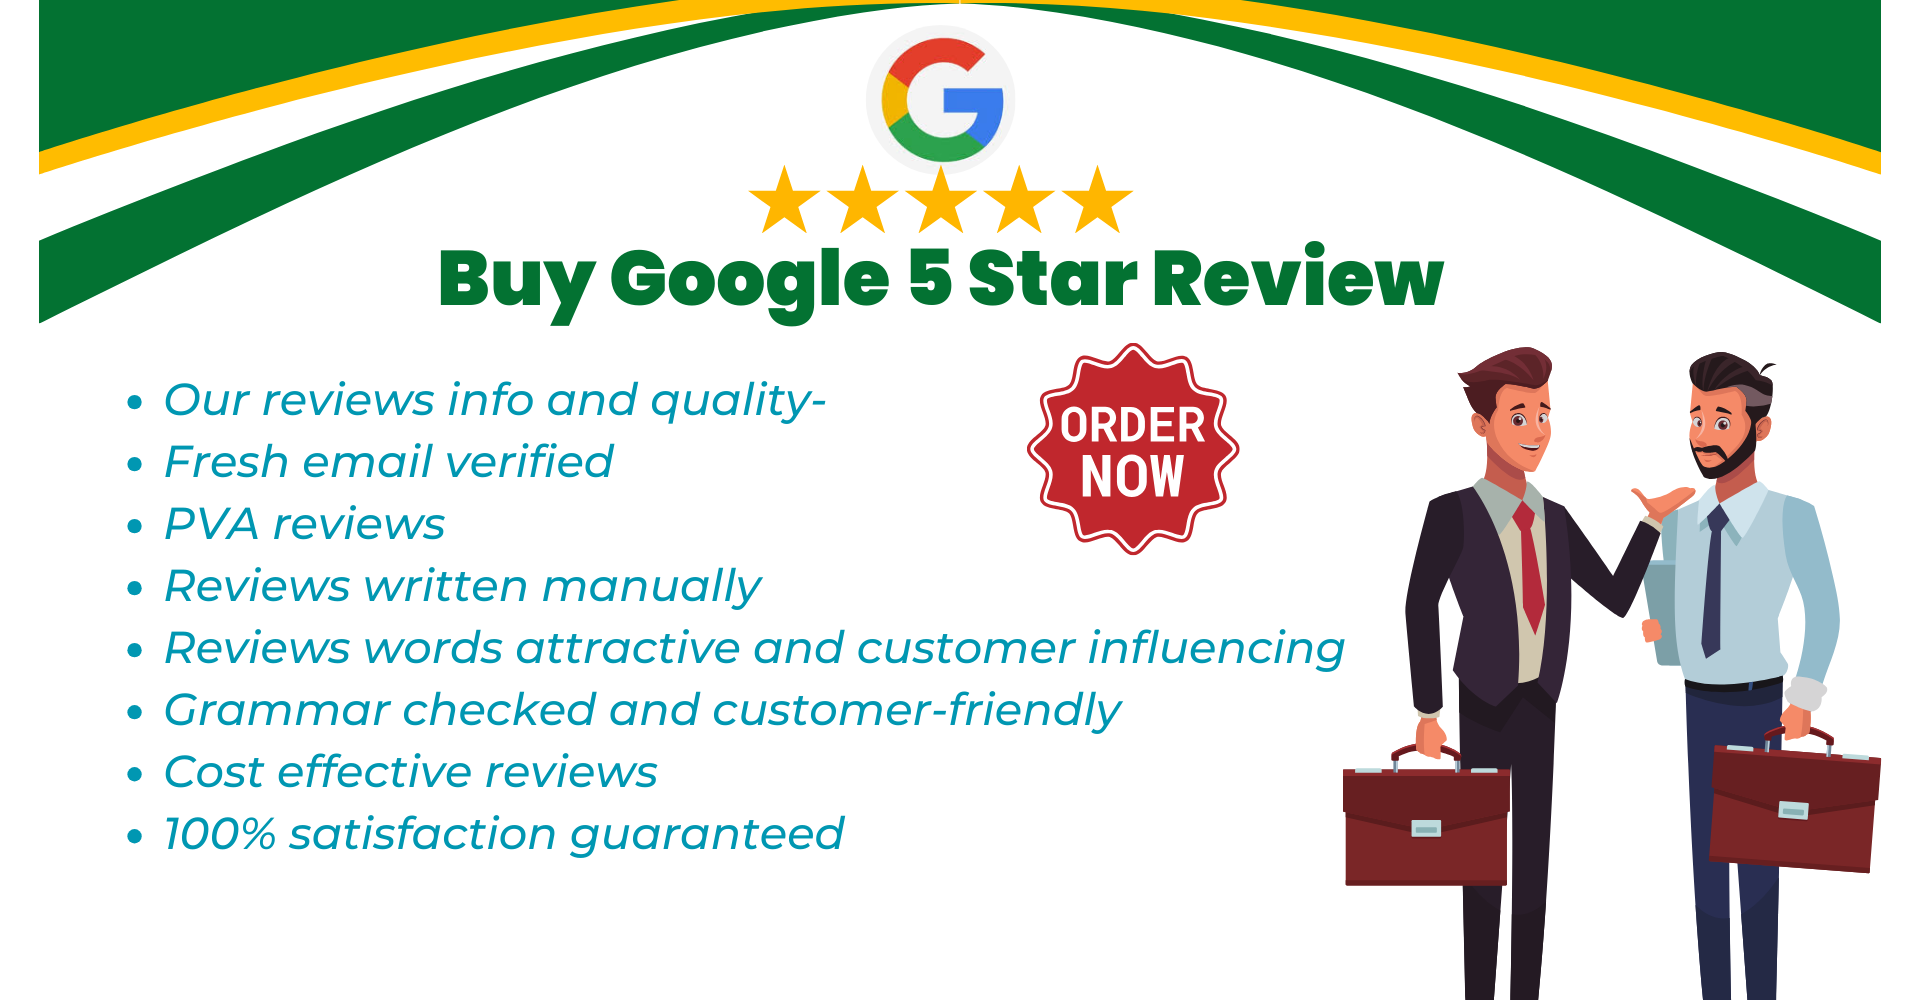 Buy Google 5 Star Review
